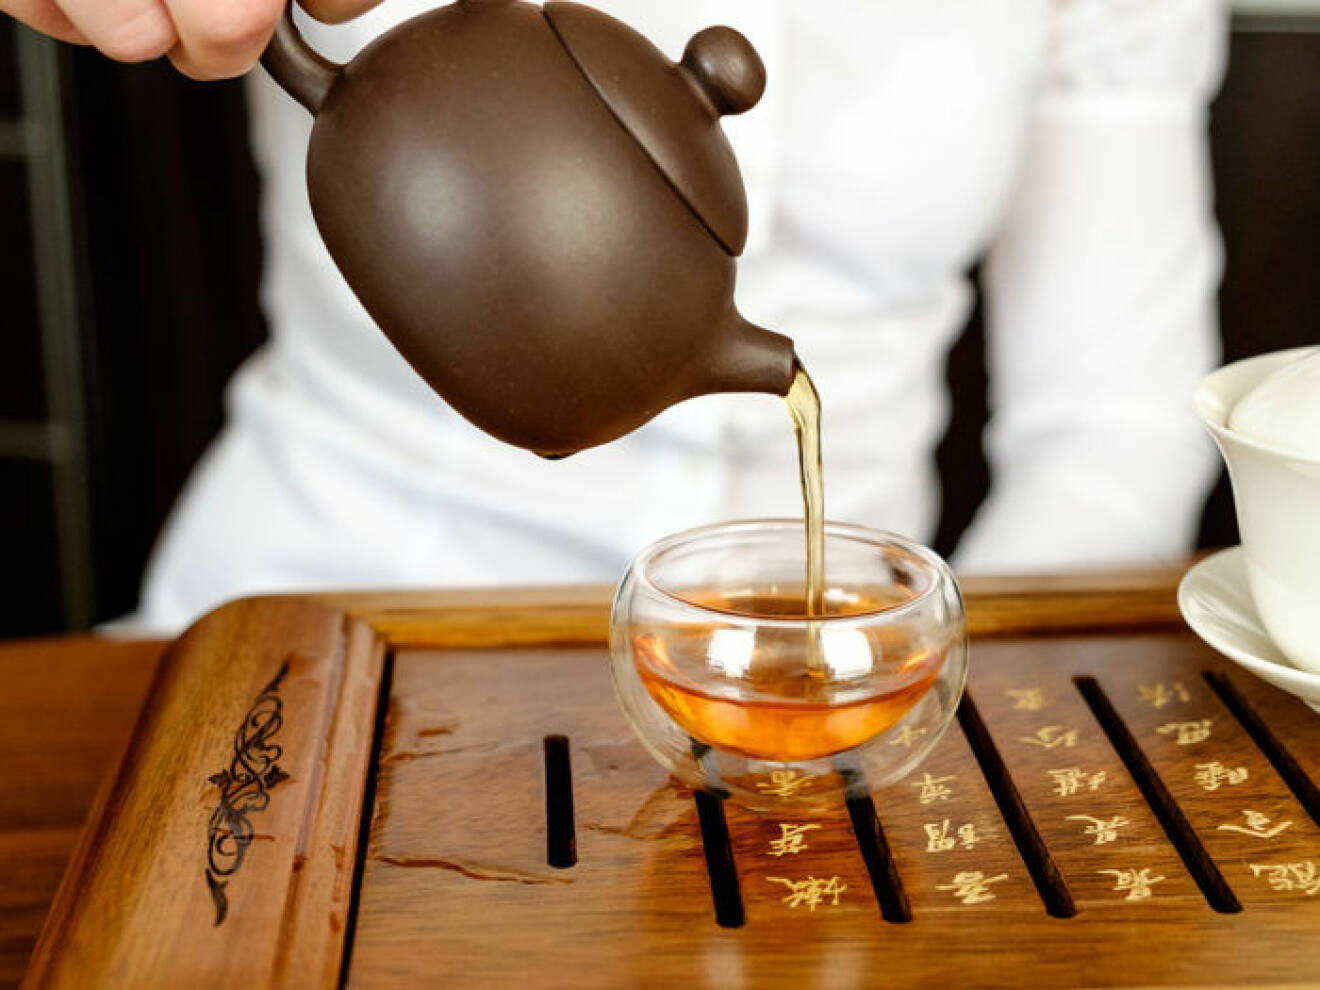 Te är trendigt! Foto: Shutterstock